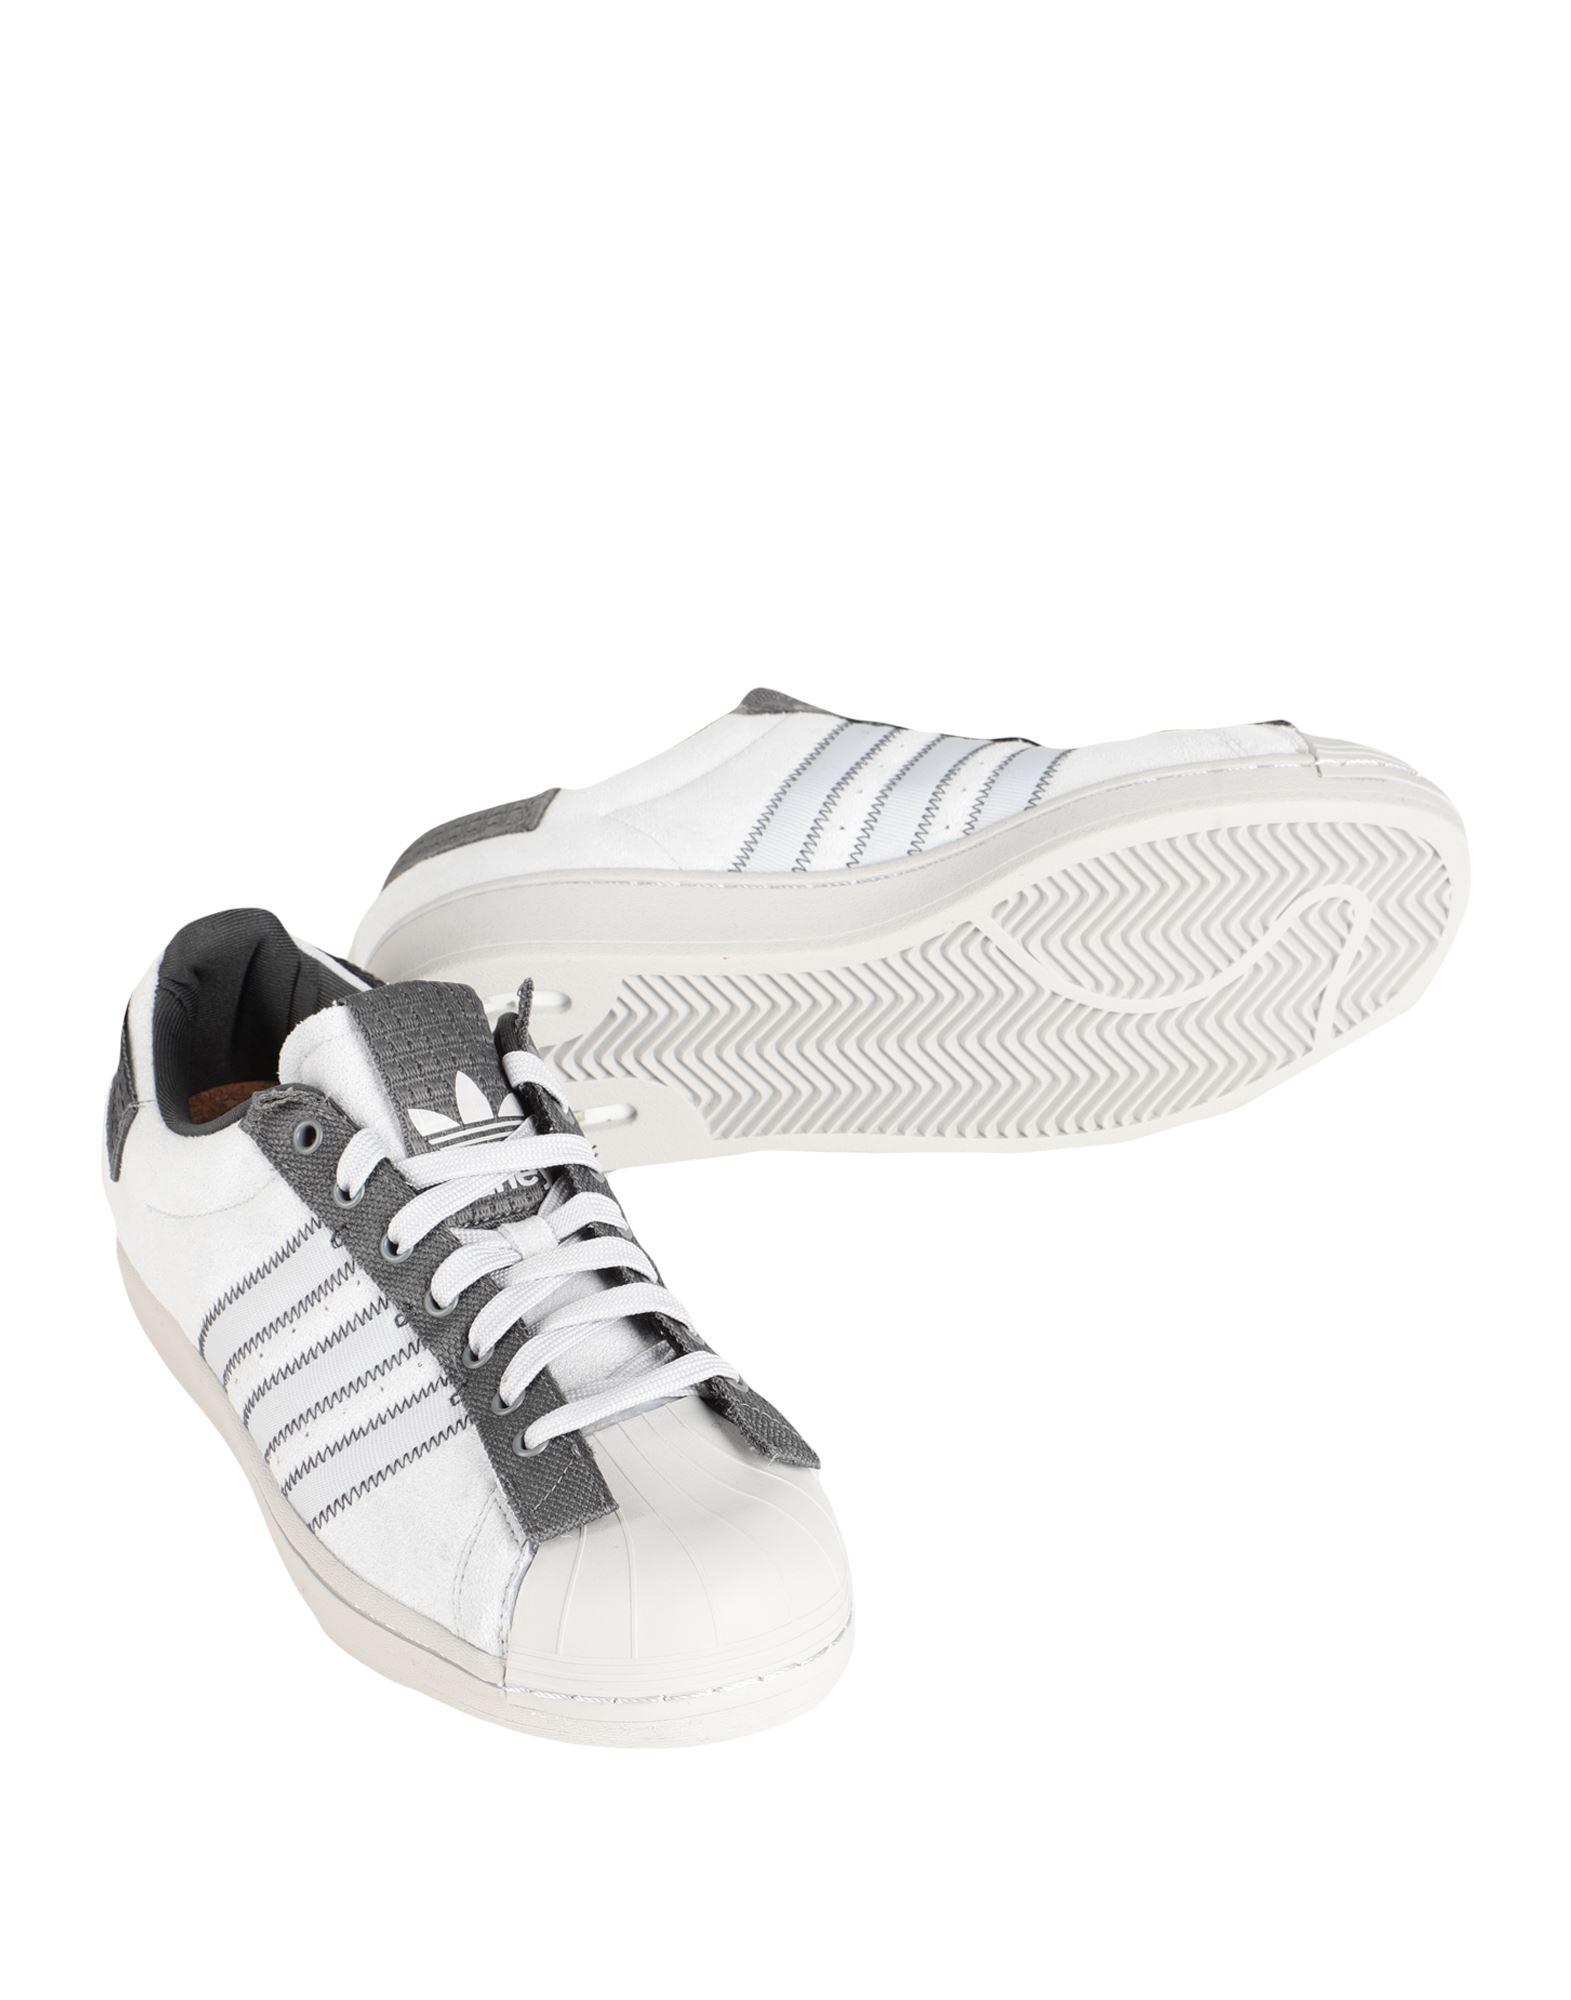 adidas Originals 'superstar Parley' Sneakers in White | Lyst